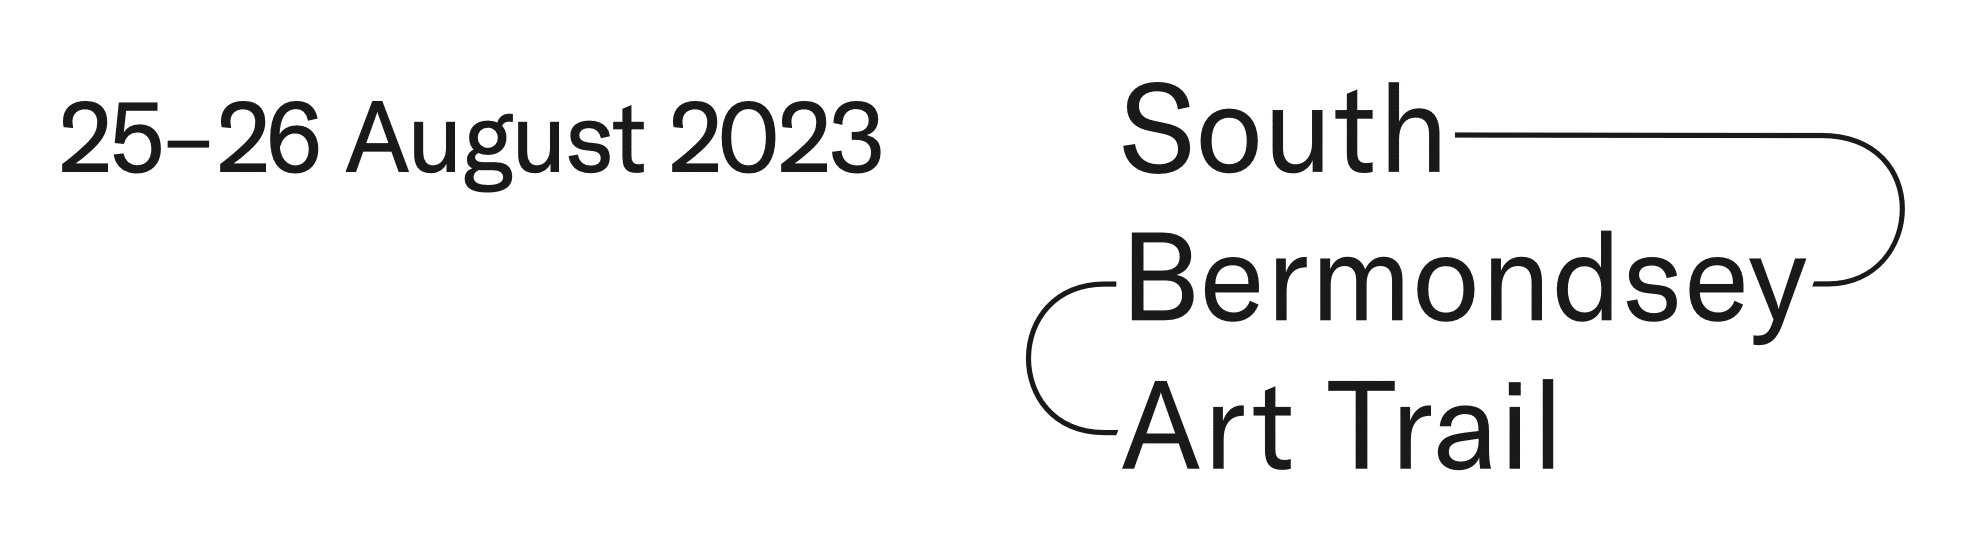 South Bermondsey Art Trail: 25th & 26th August 2023